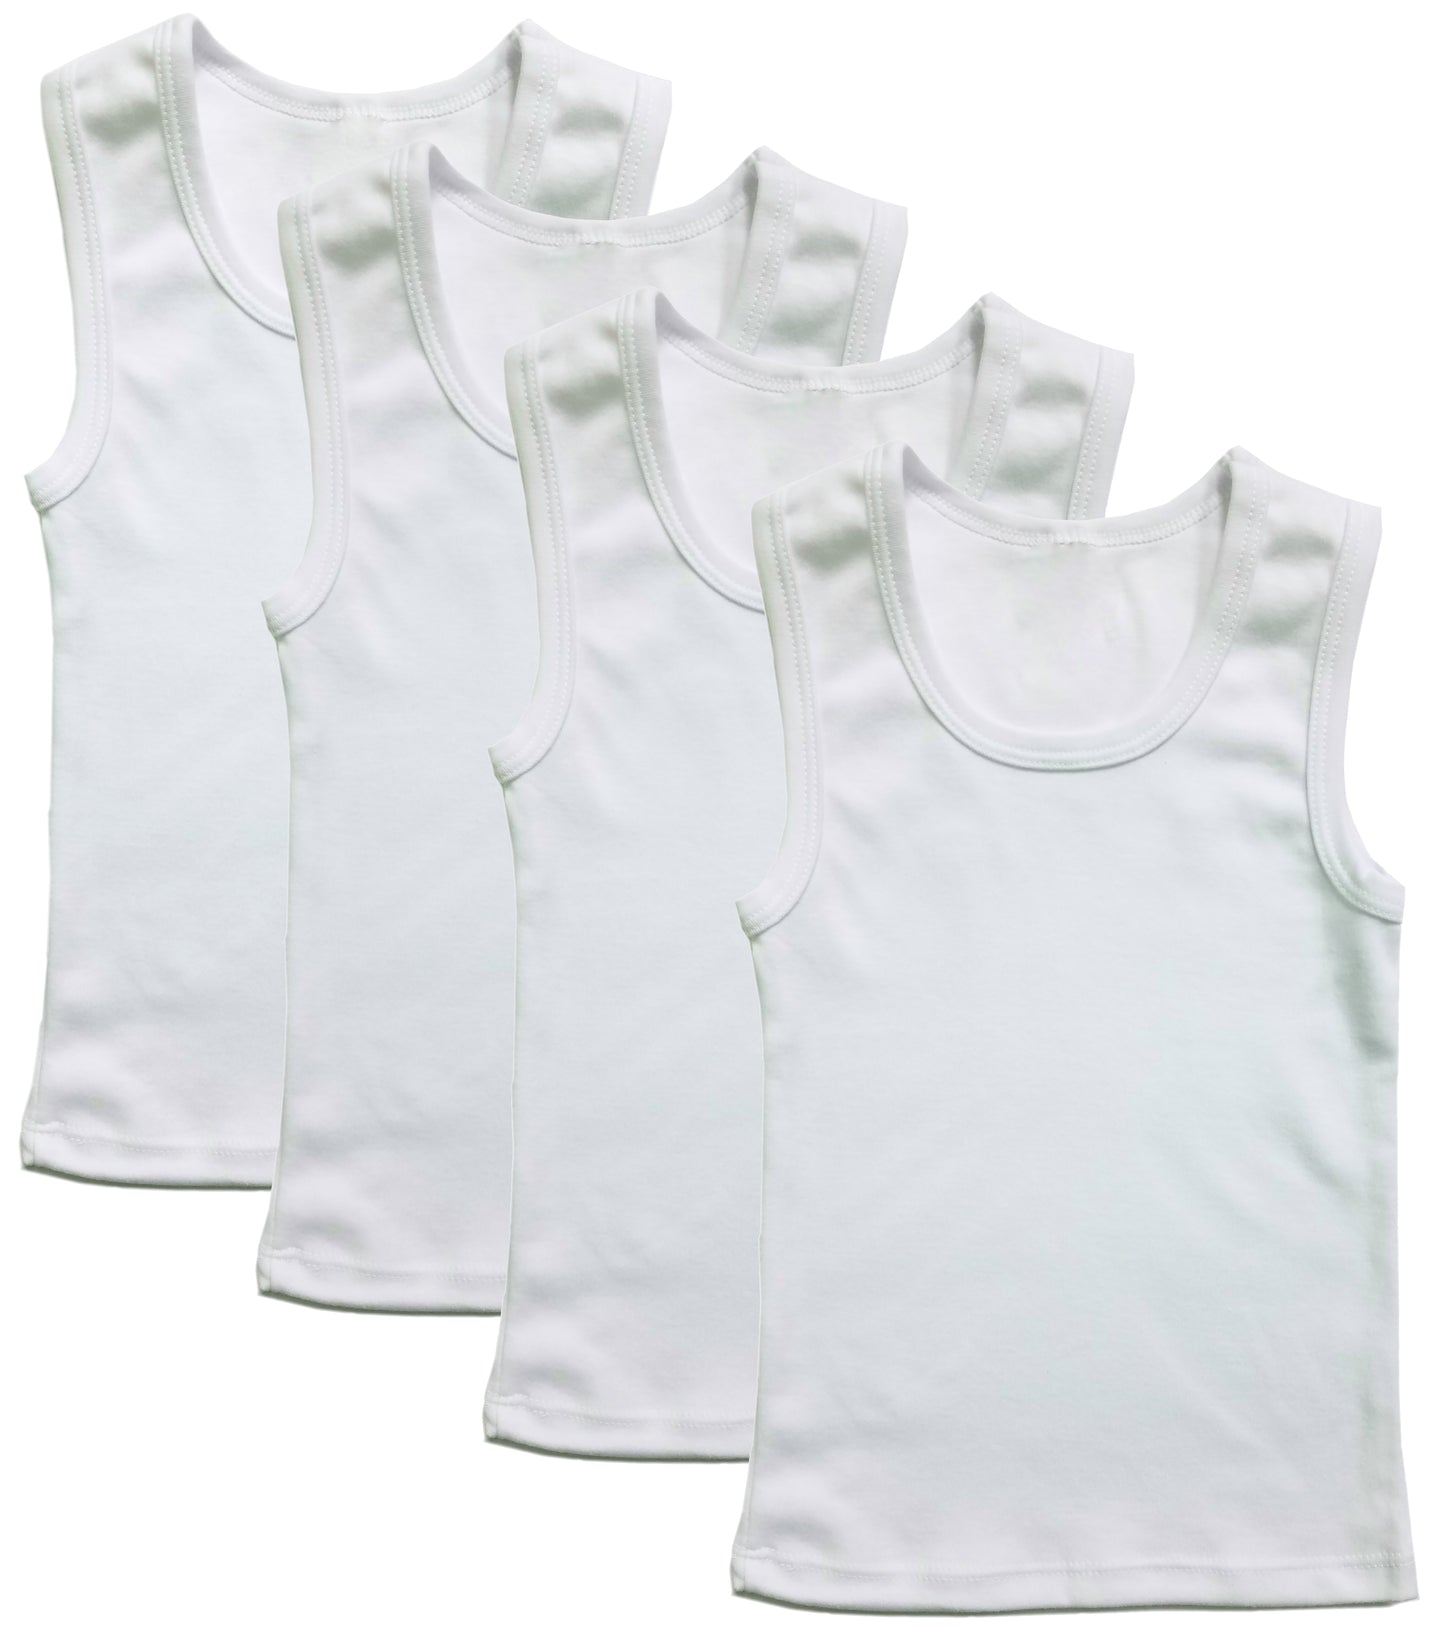 Boys Undershirt Cotton Tank Top Sleeveless 100% Cotton-KC 4400